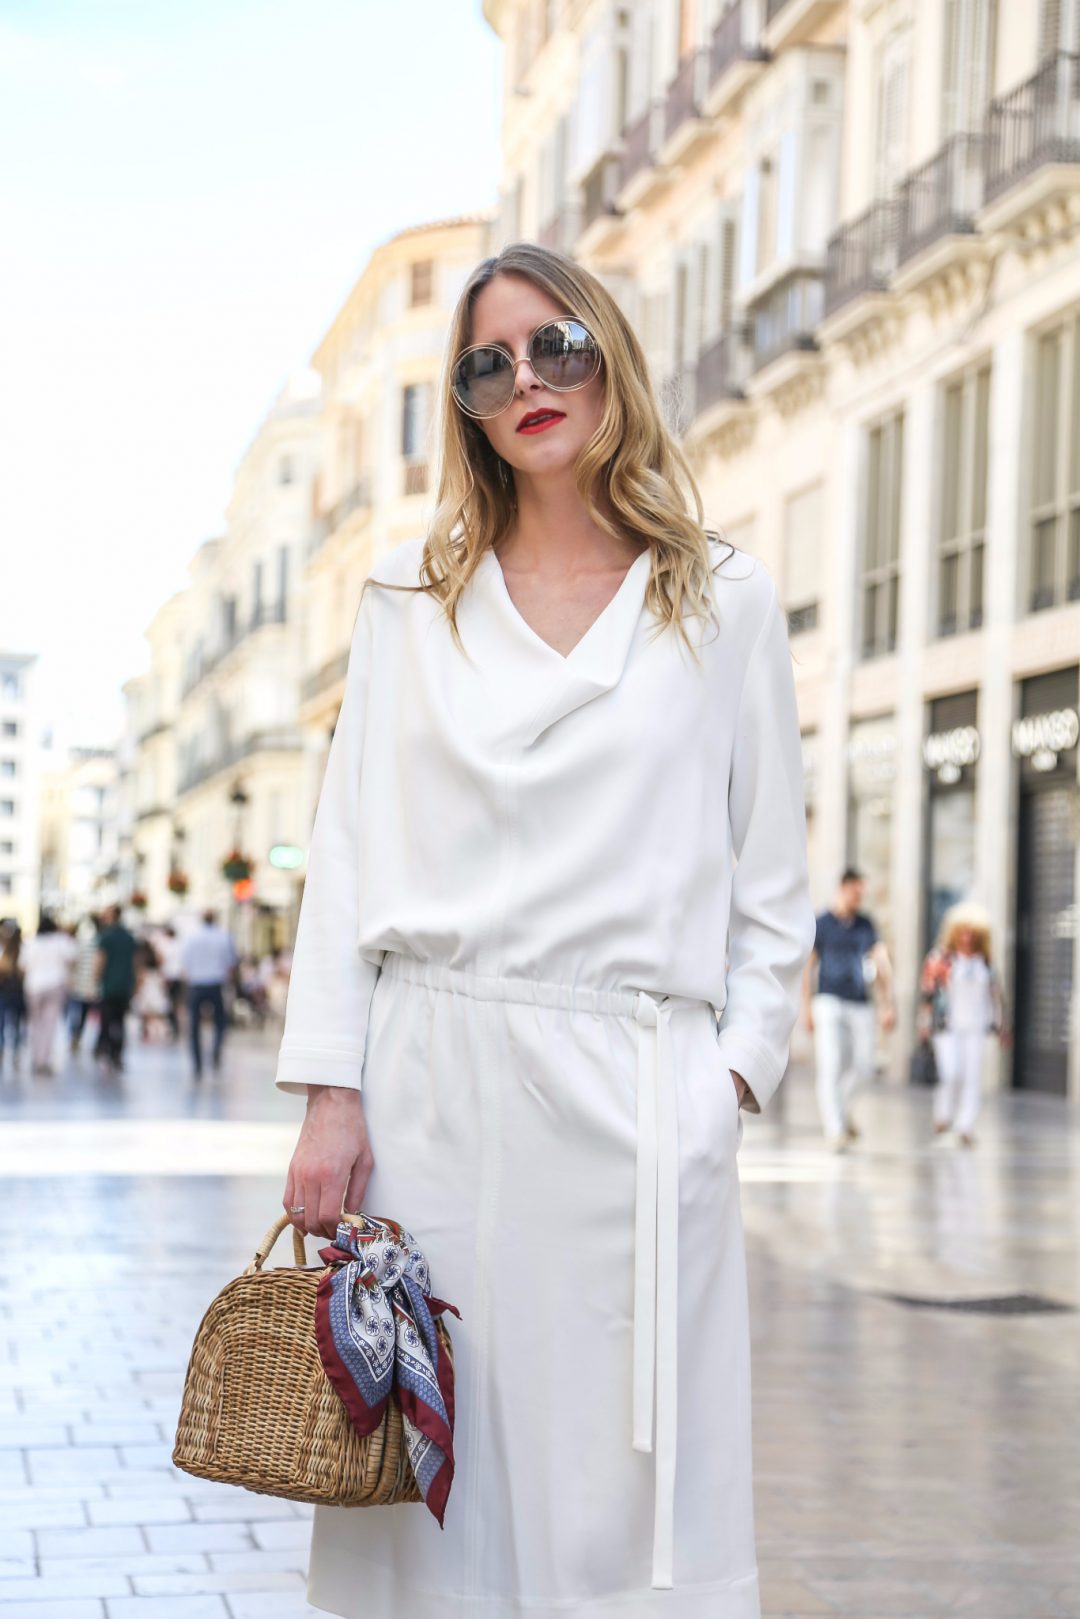 MOD-by-Monique-Fashion-Looks-The-White-Dress-31-1-1080x1619